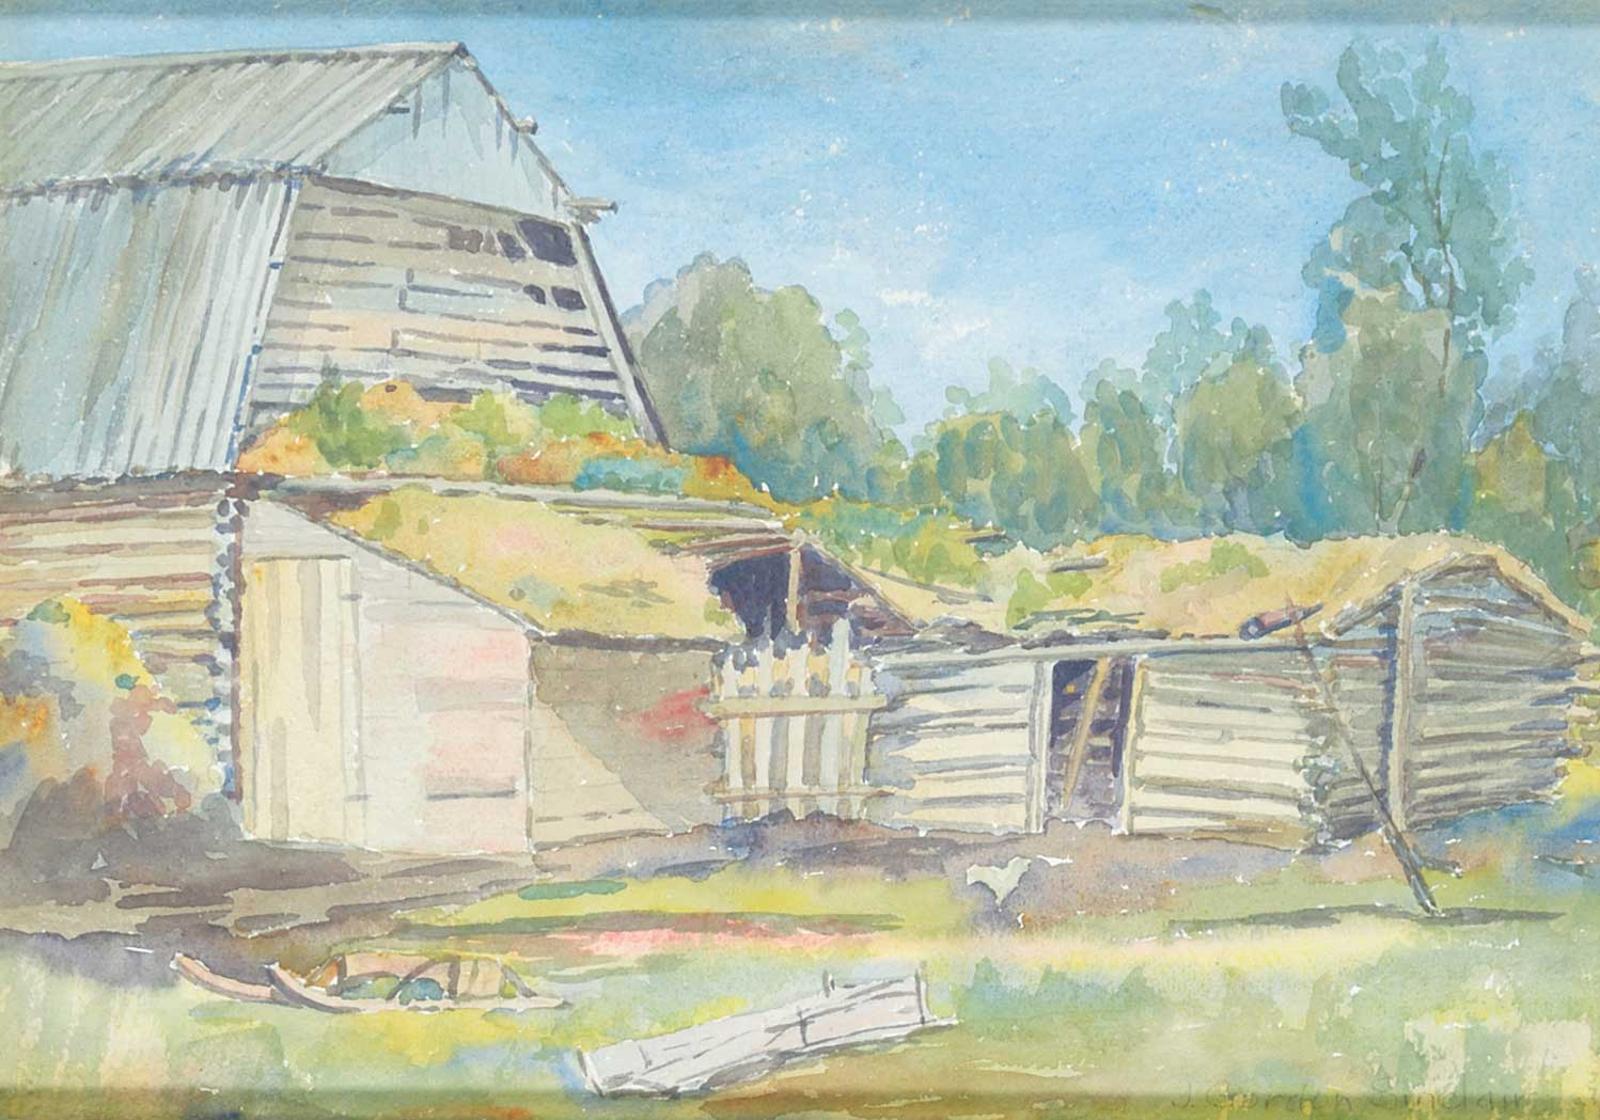 John Gordon Sinclair (1889-1980) - Untitled - The Old Barn